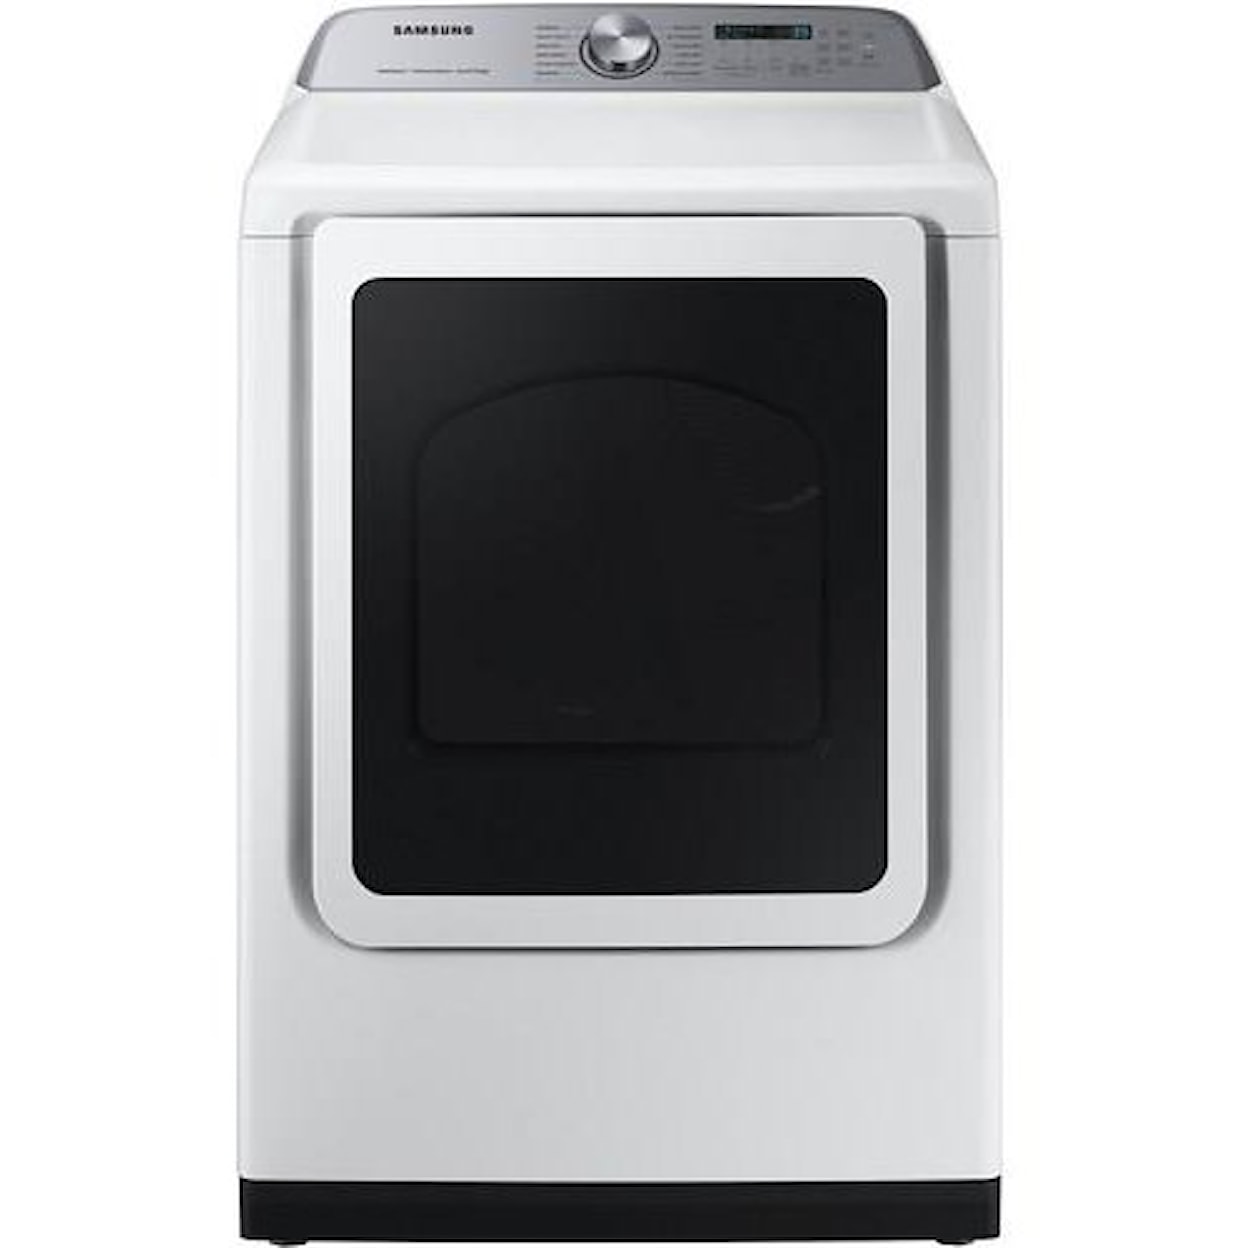 Samsung Appliances Dryers- Samsung Electric Dryer